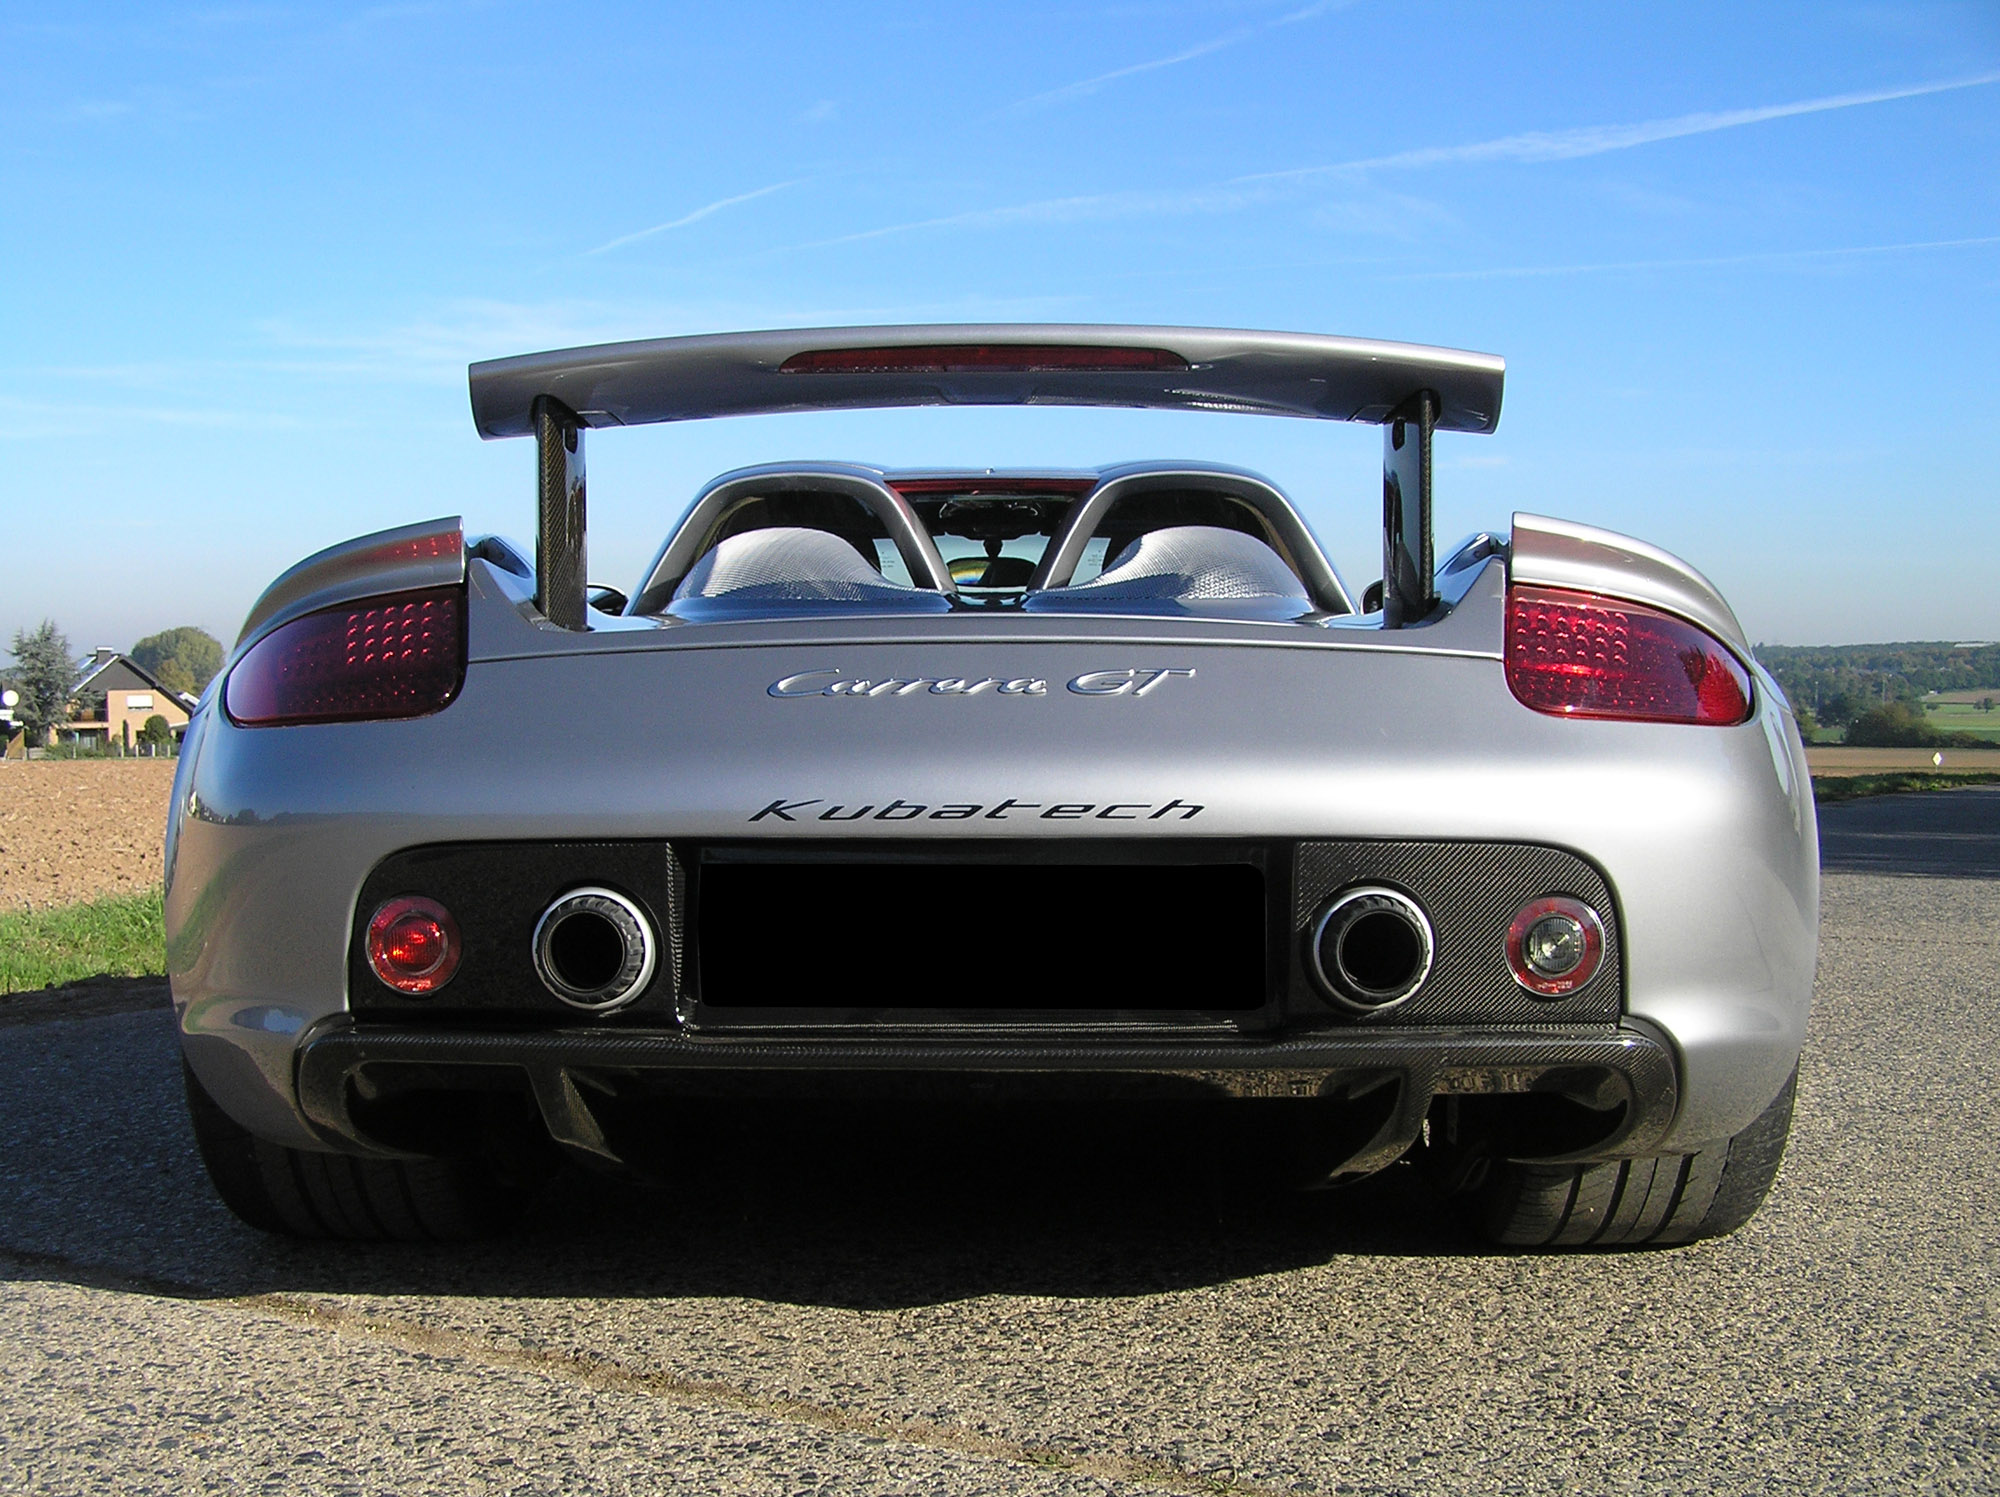 Kubatech releases Stage II power kit for Porsche Carrera GT